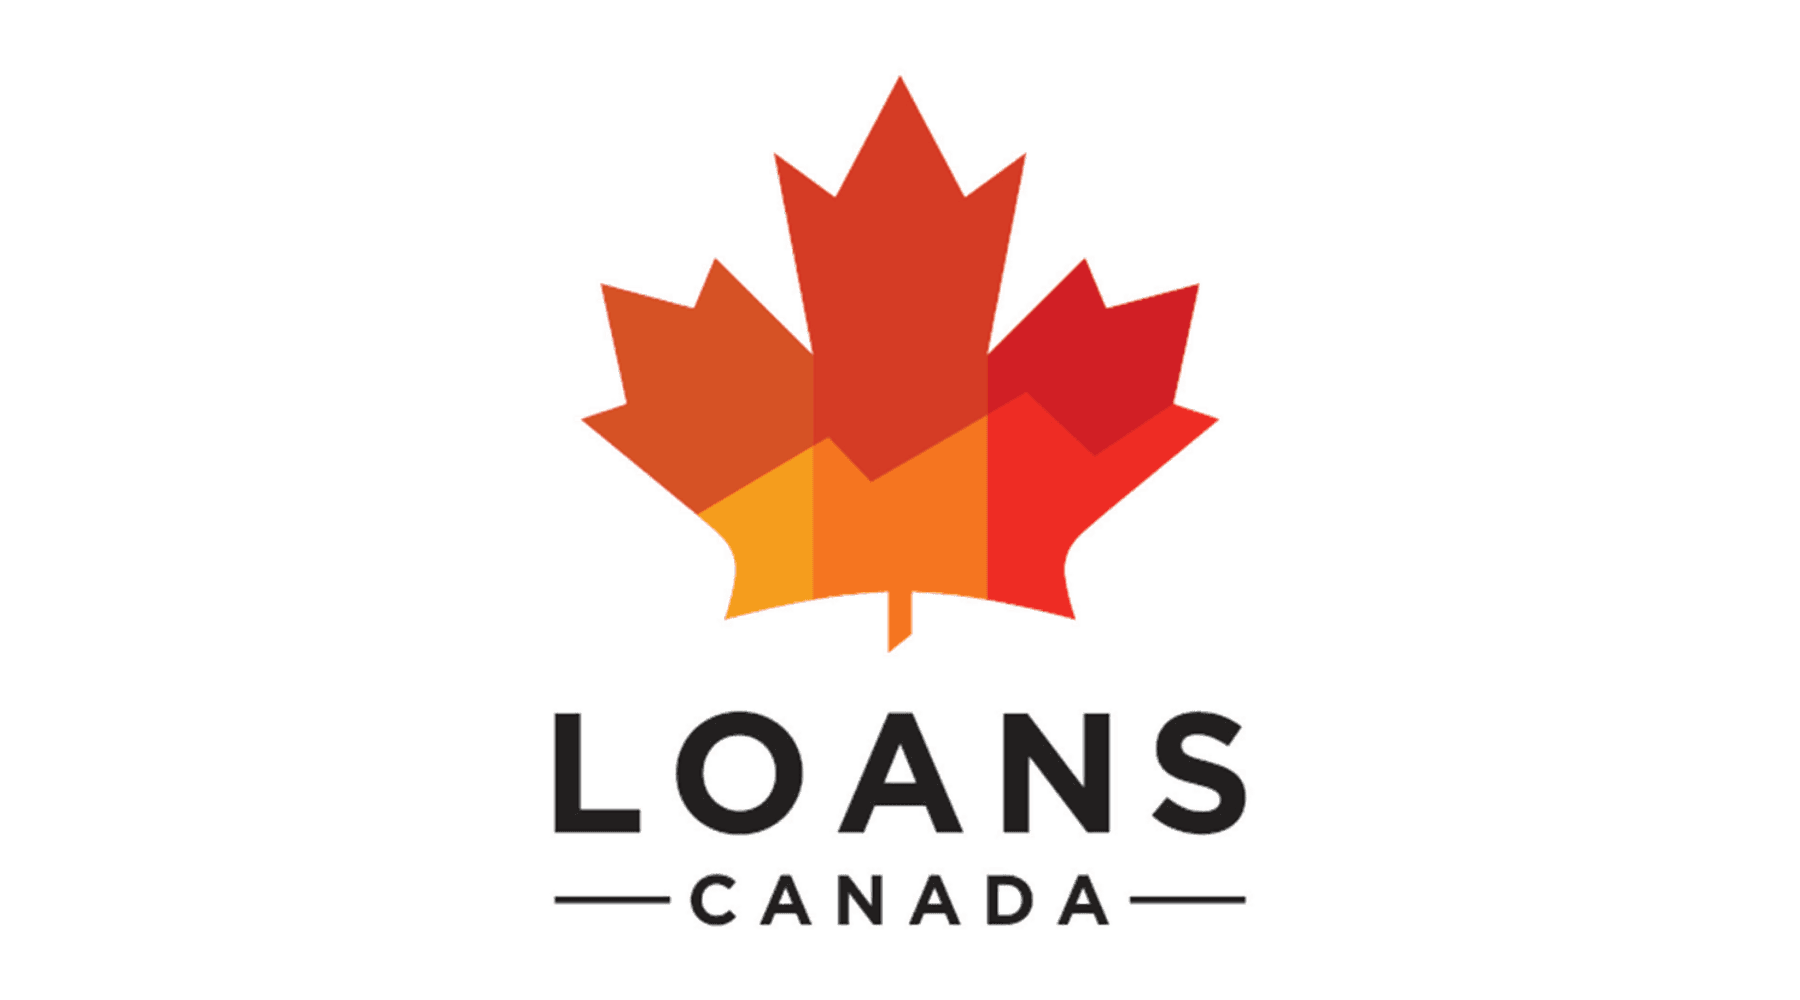 Loans Canada